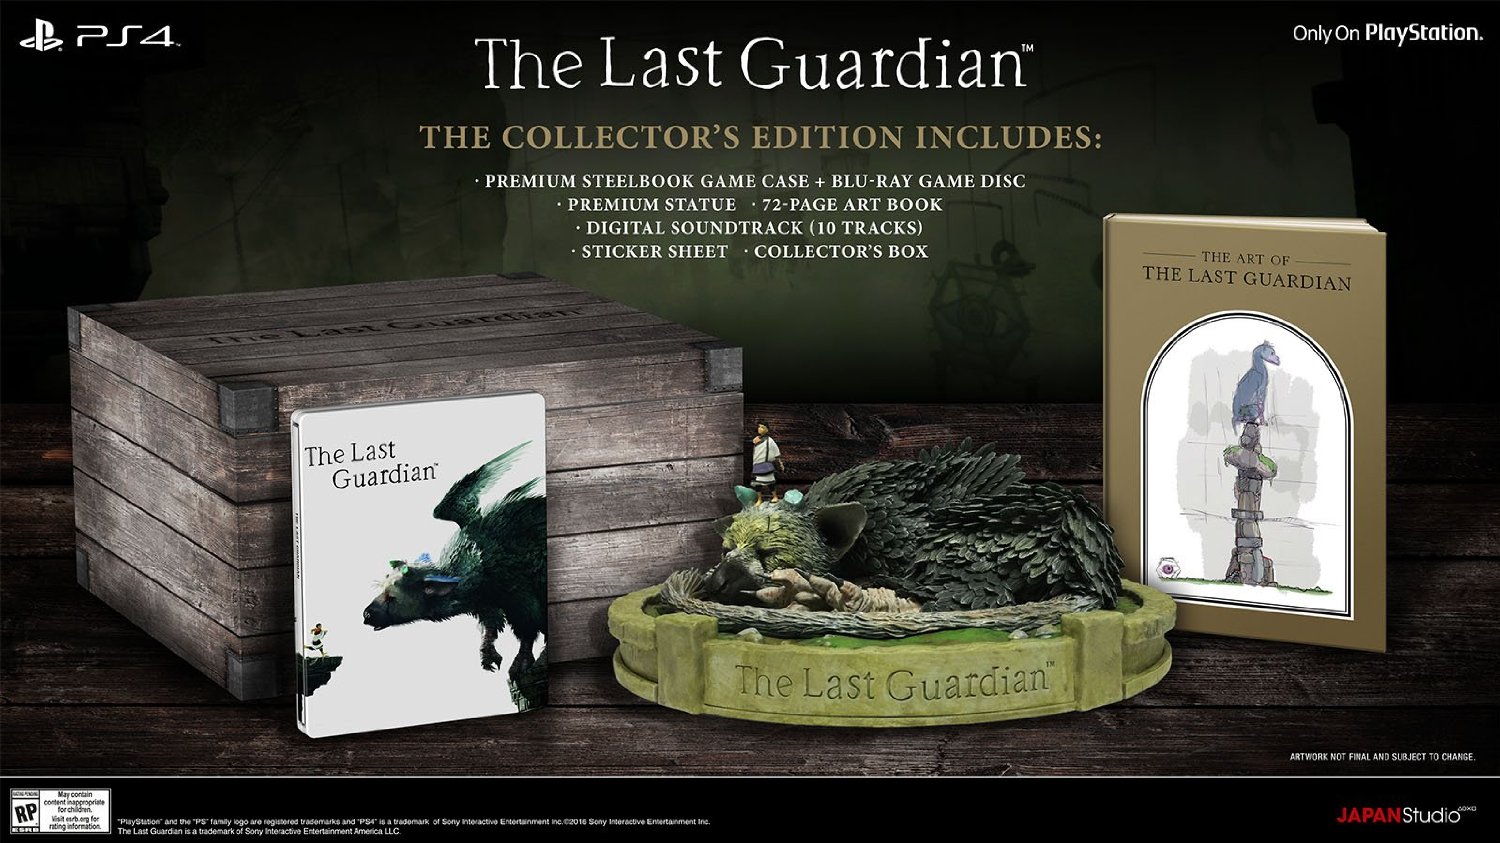 The Last Guardian: Collector's Edition - Photo Credit: Sony via Amazon.com